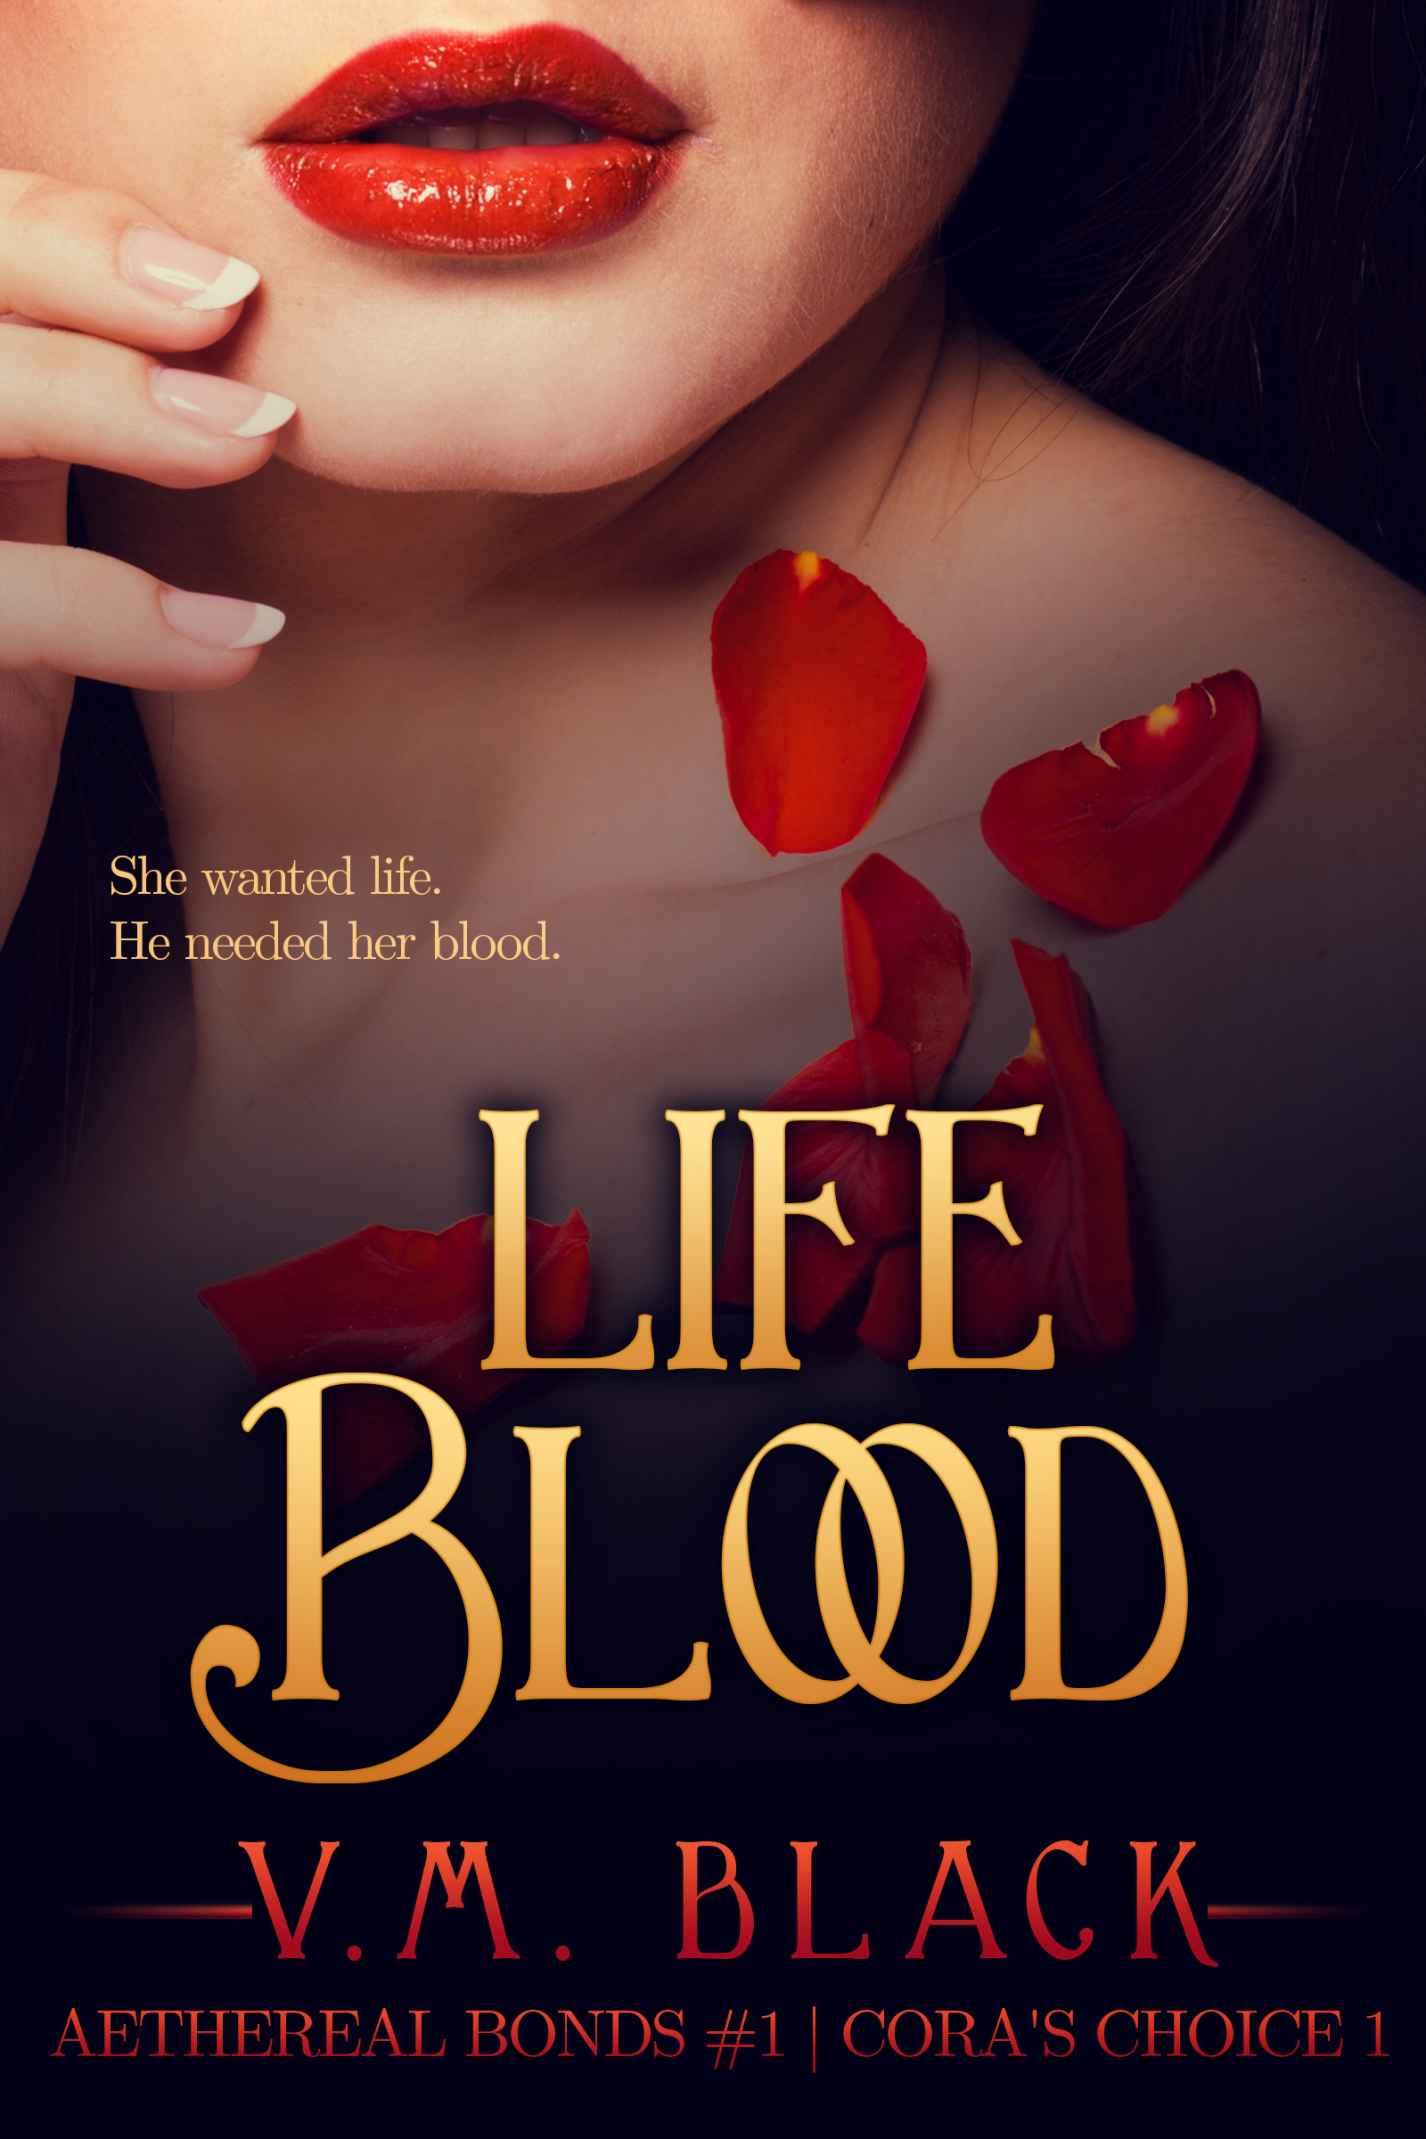 Life Blood: Cora's Choice #1 by V. M. Black